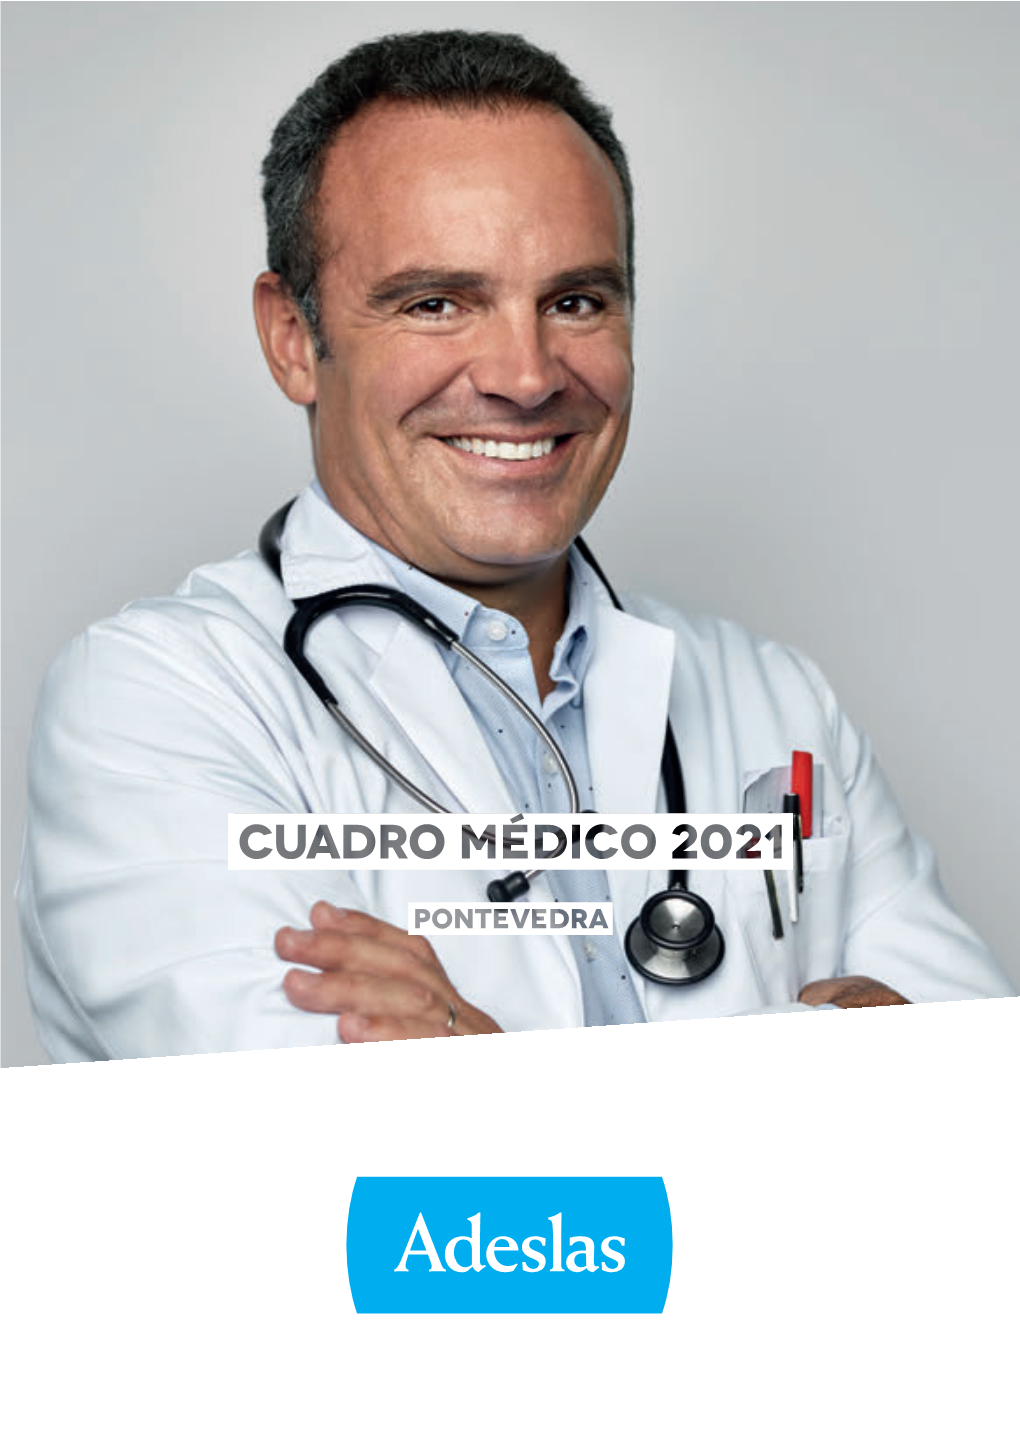 Cuadro Médico Adeslas Pontevedra